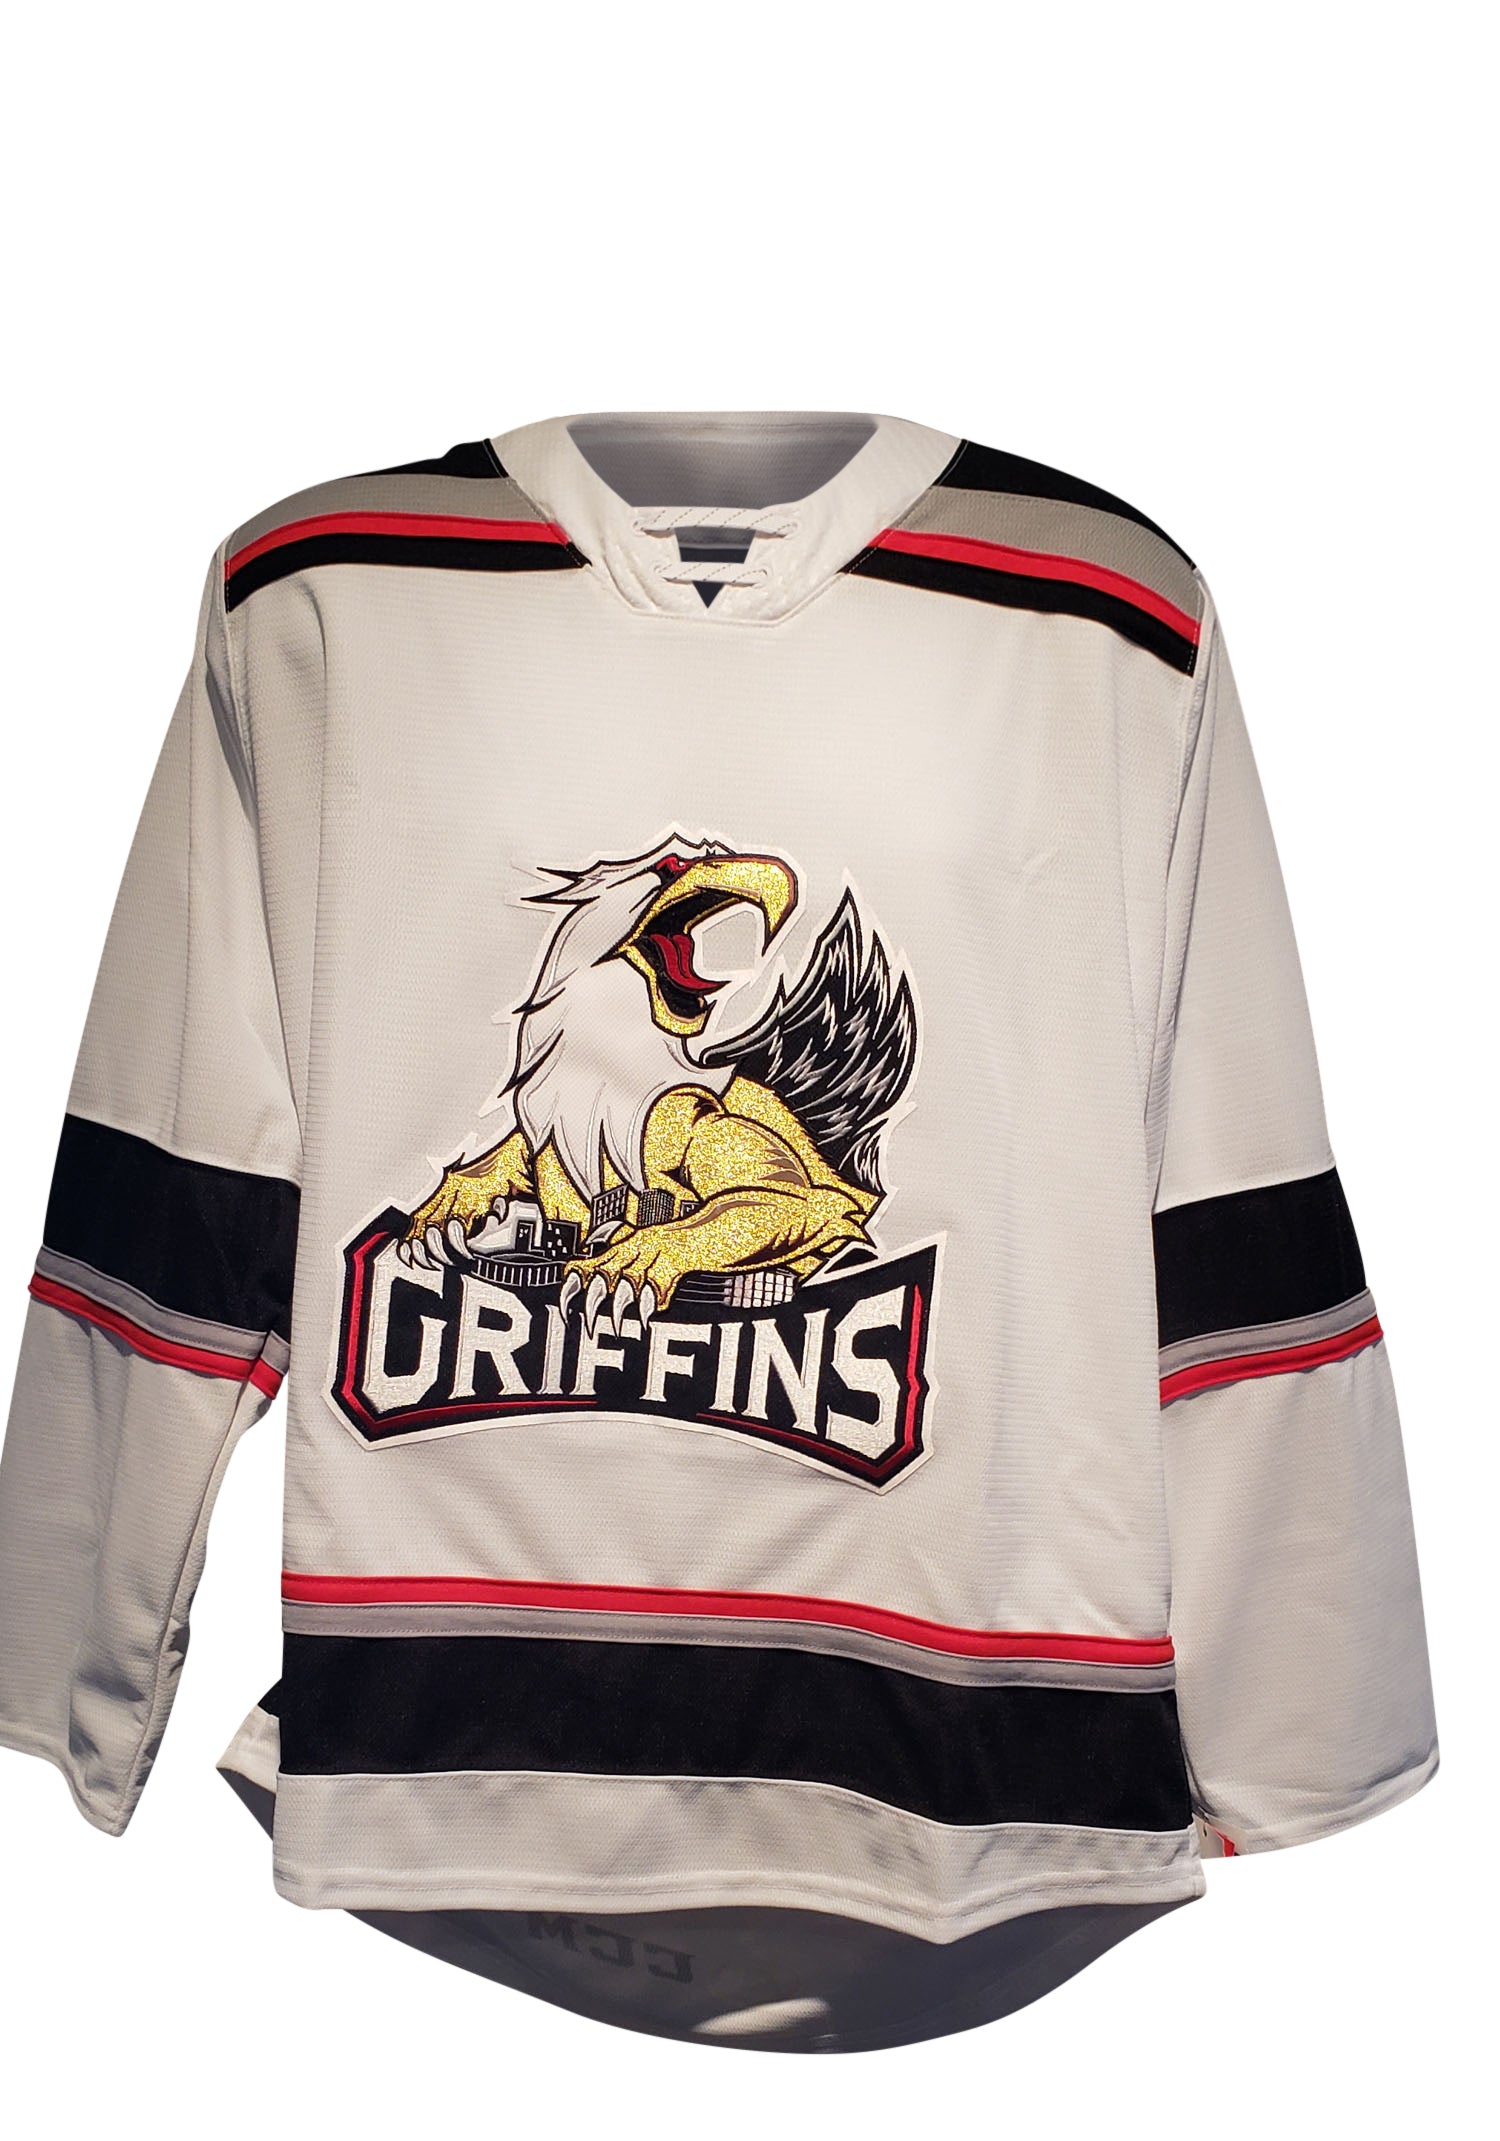 The Zone - Grand Rapids Griffins - Grand Rapids Griffins